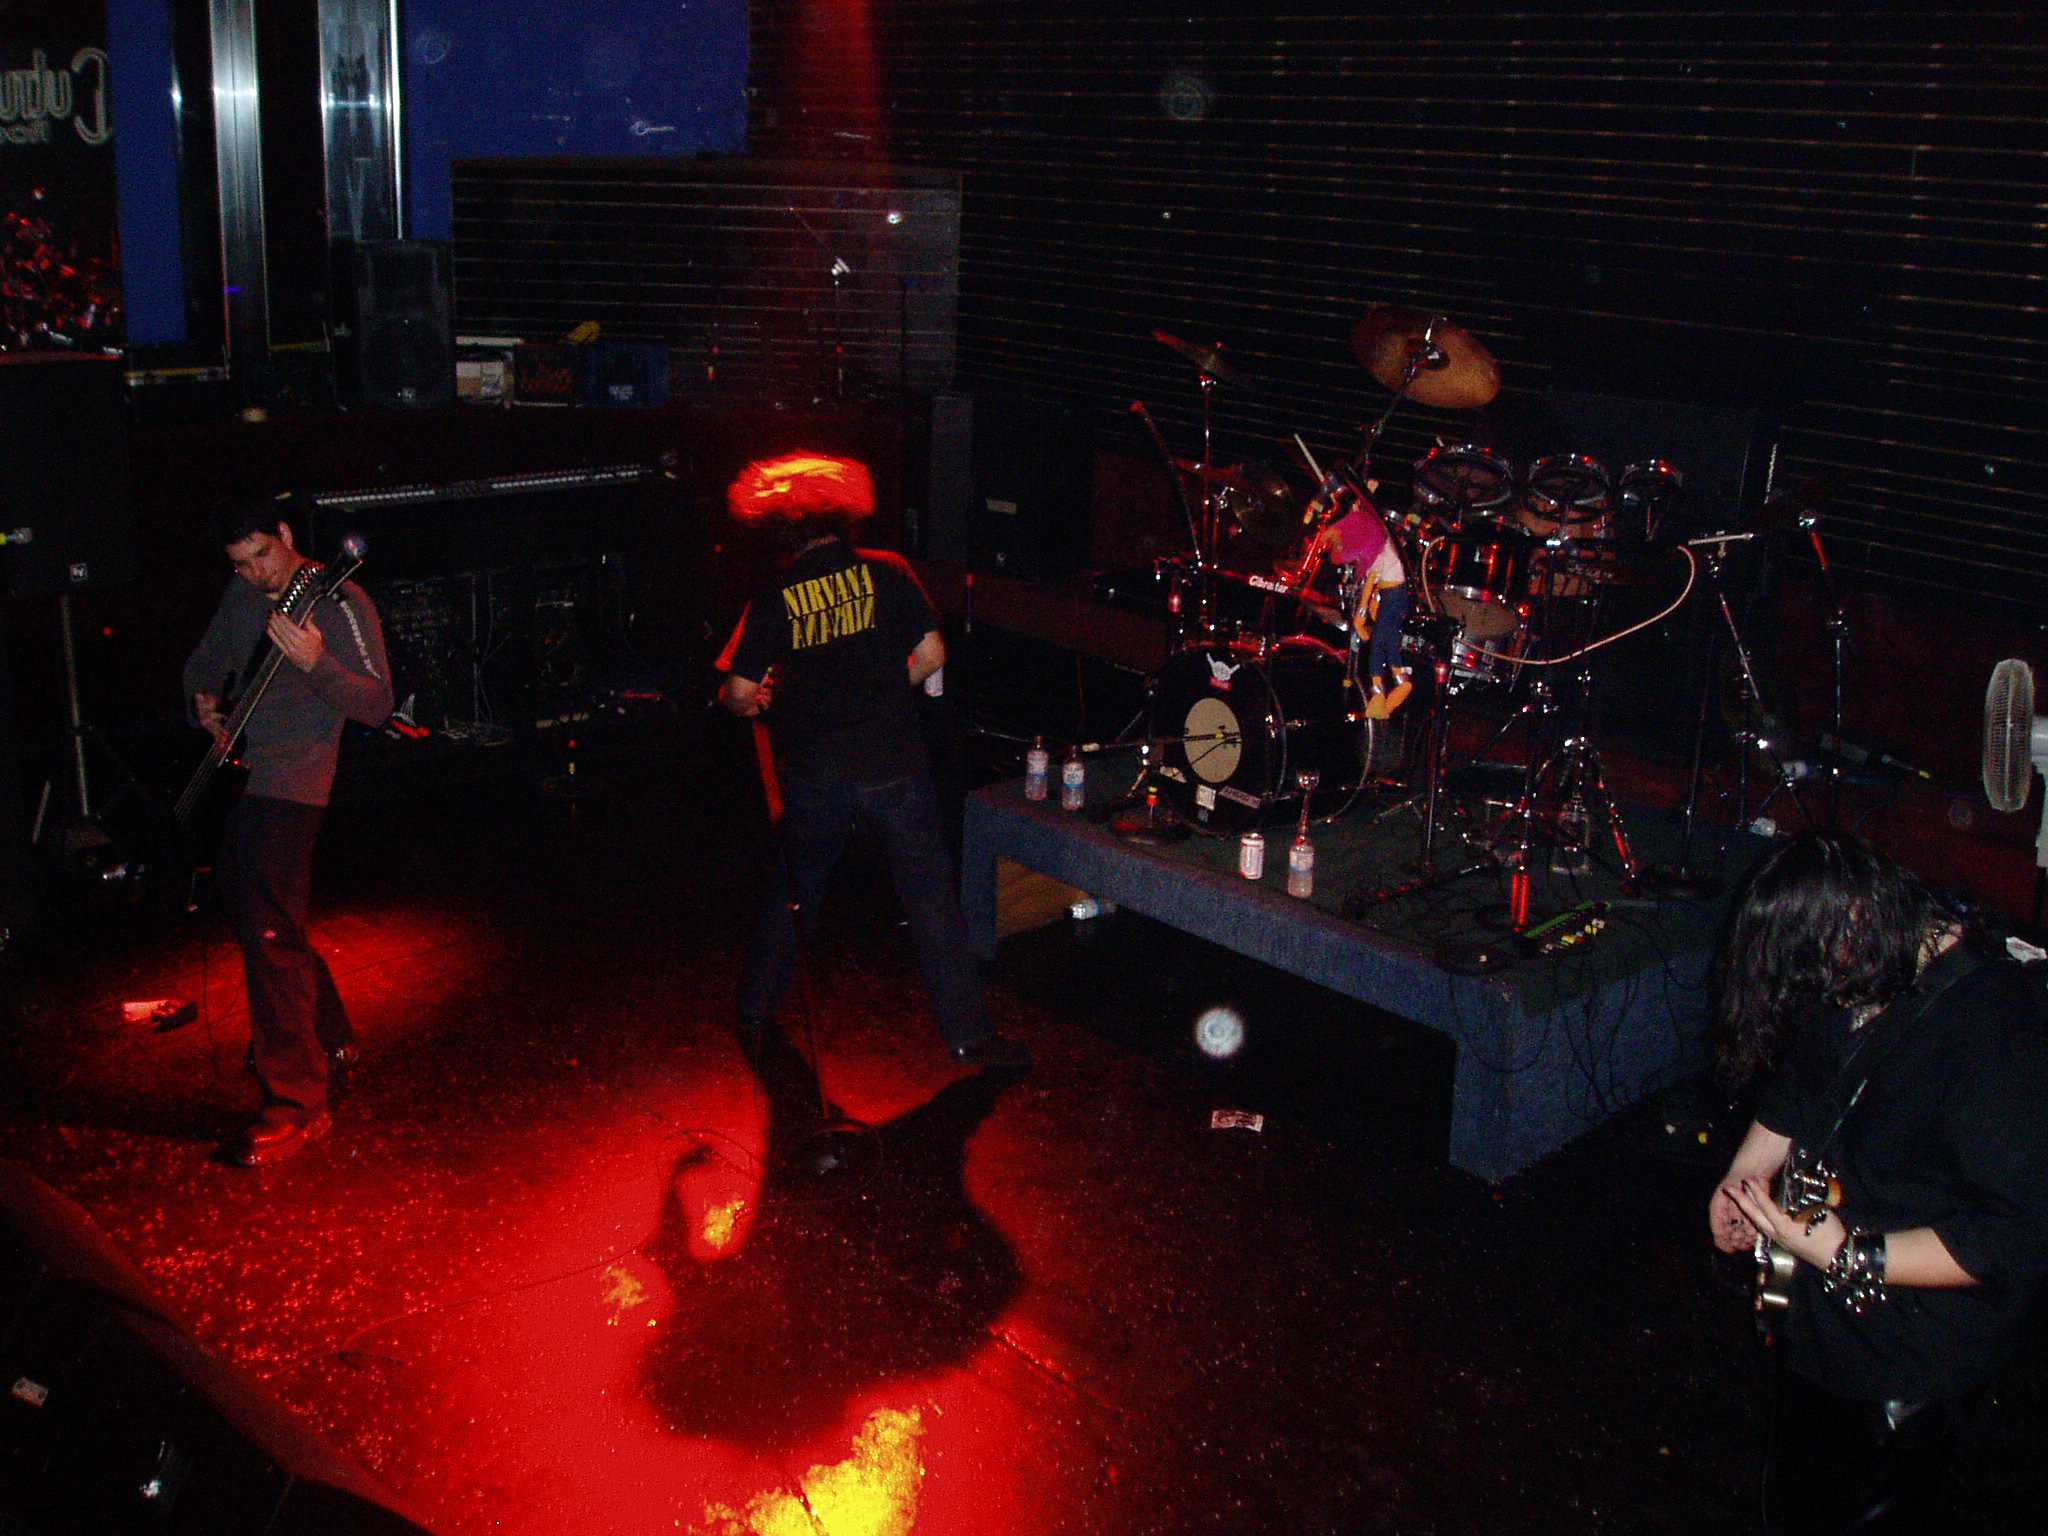 Osiris Rising performing in concert - Culture Room - Fort Lauderdale, FL - January 2, 2004 - Photo by Brenda Vorisek